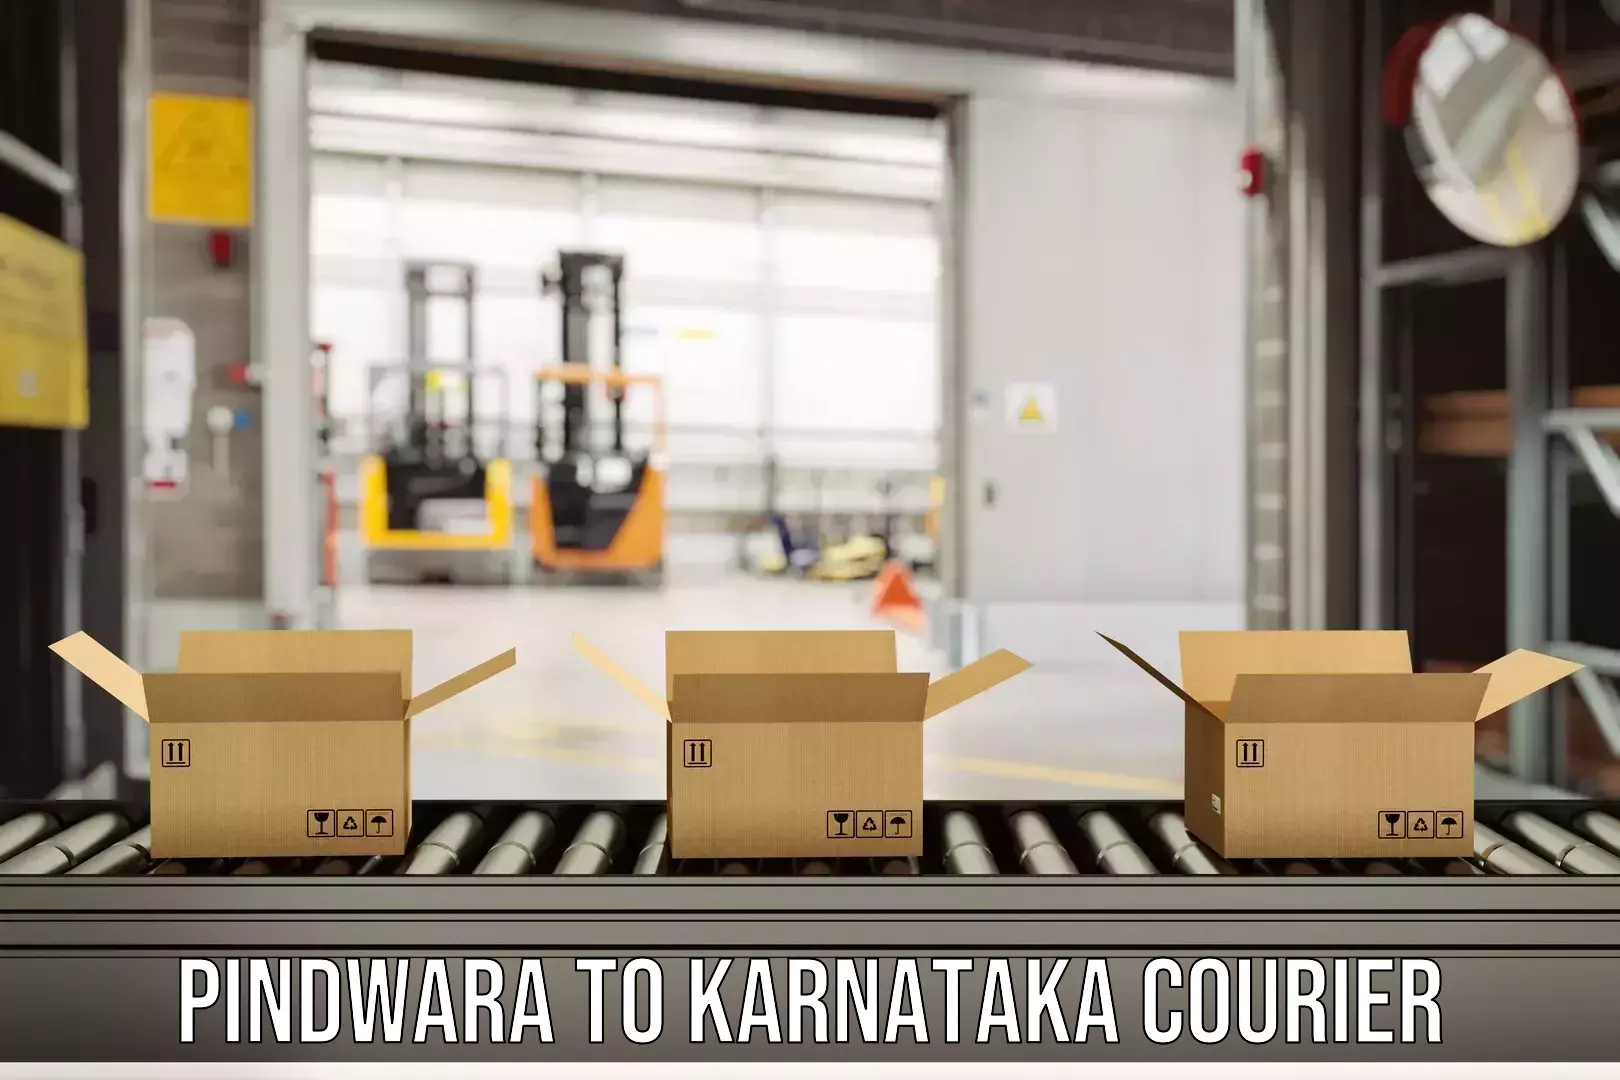 Courier service innovation Pindwara to Bangalore